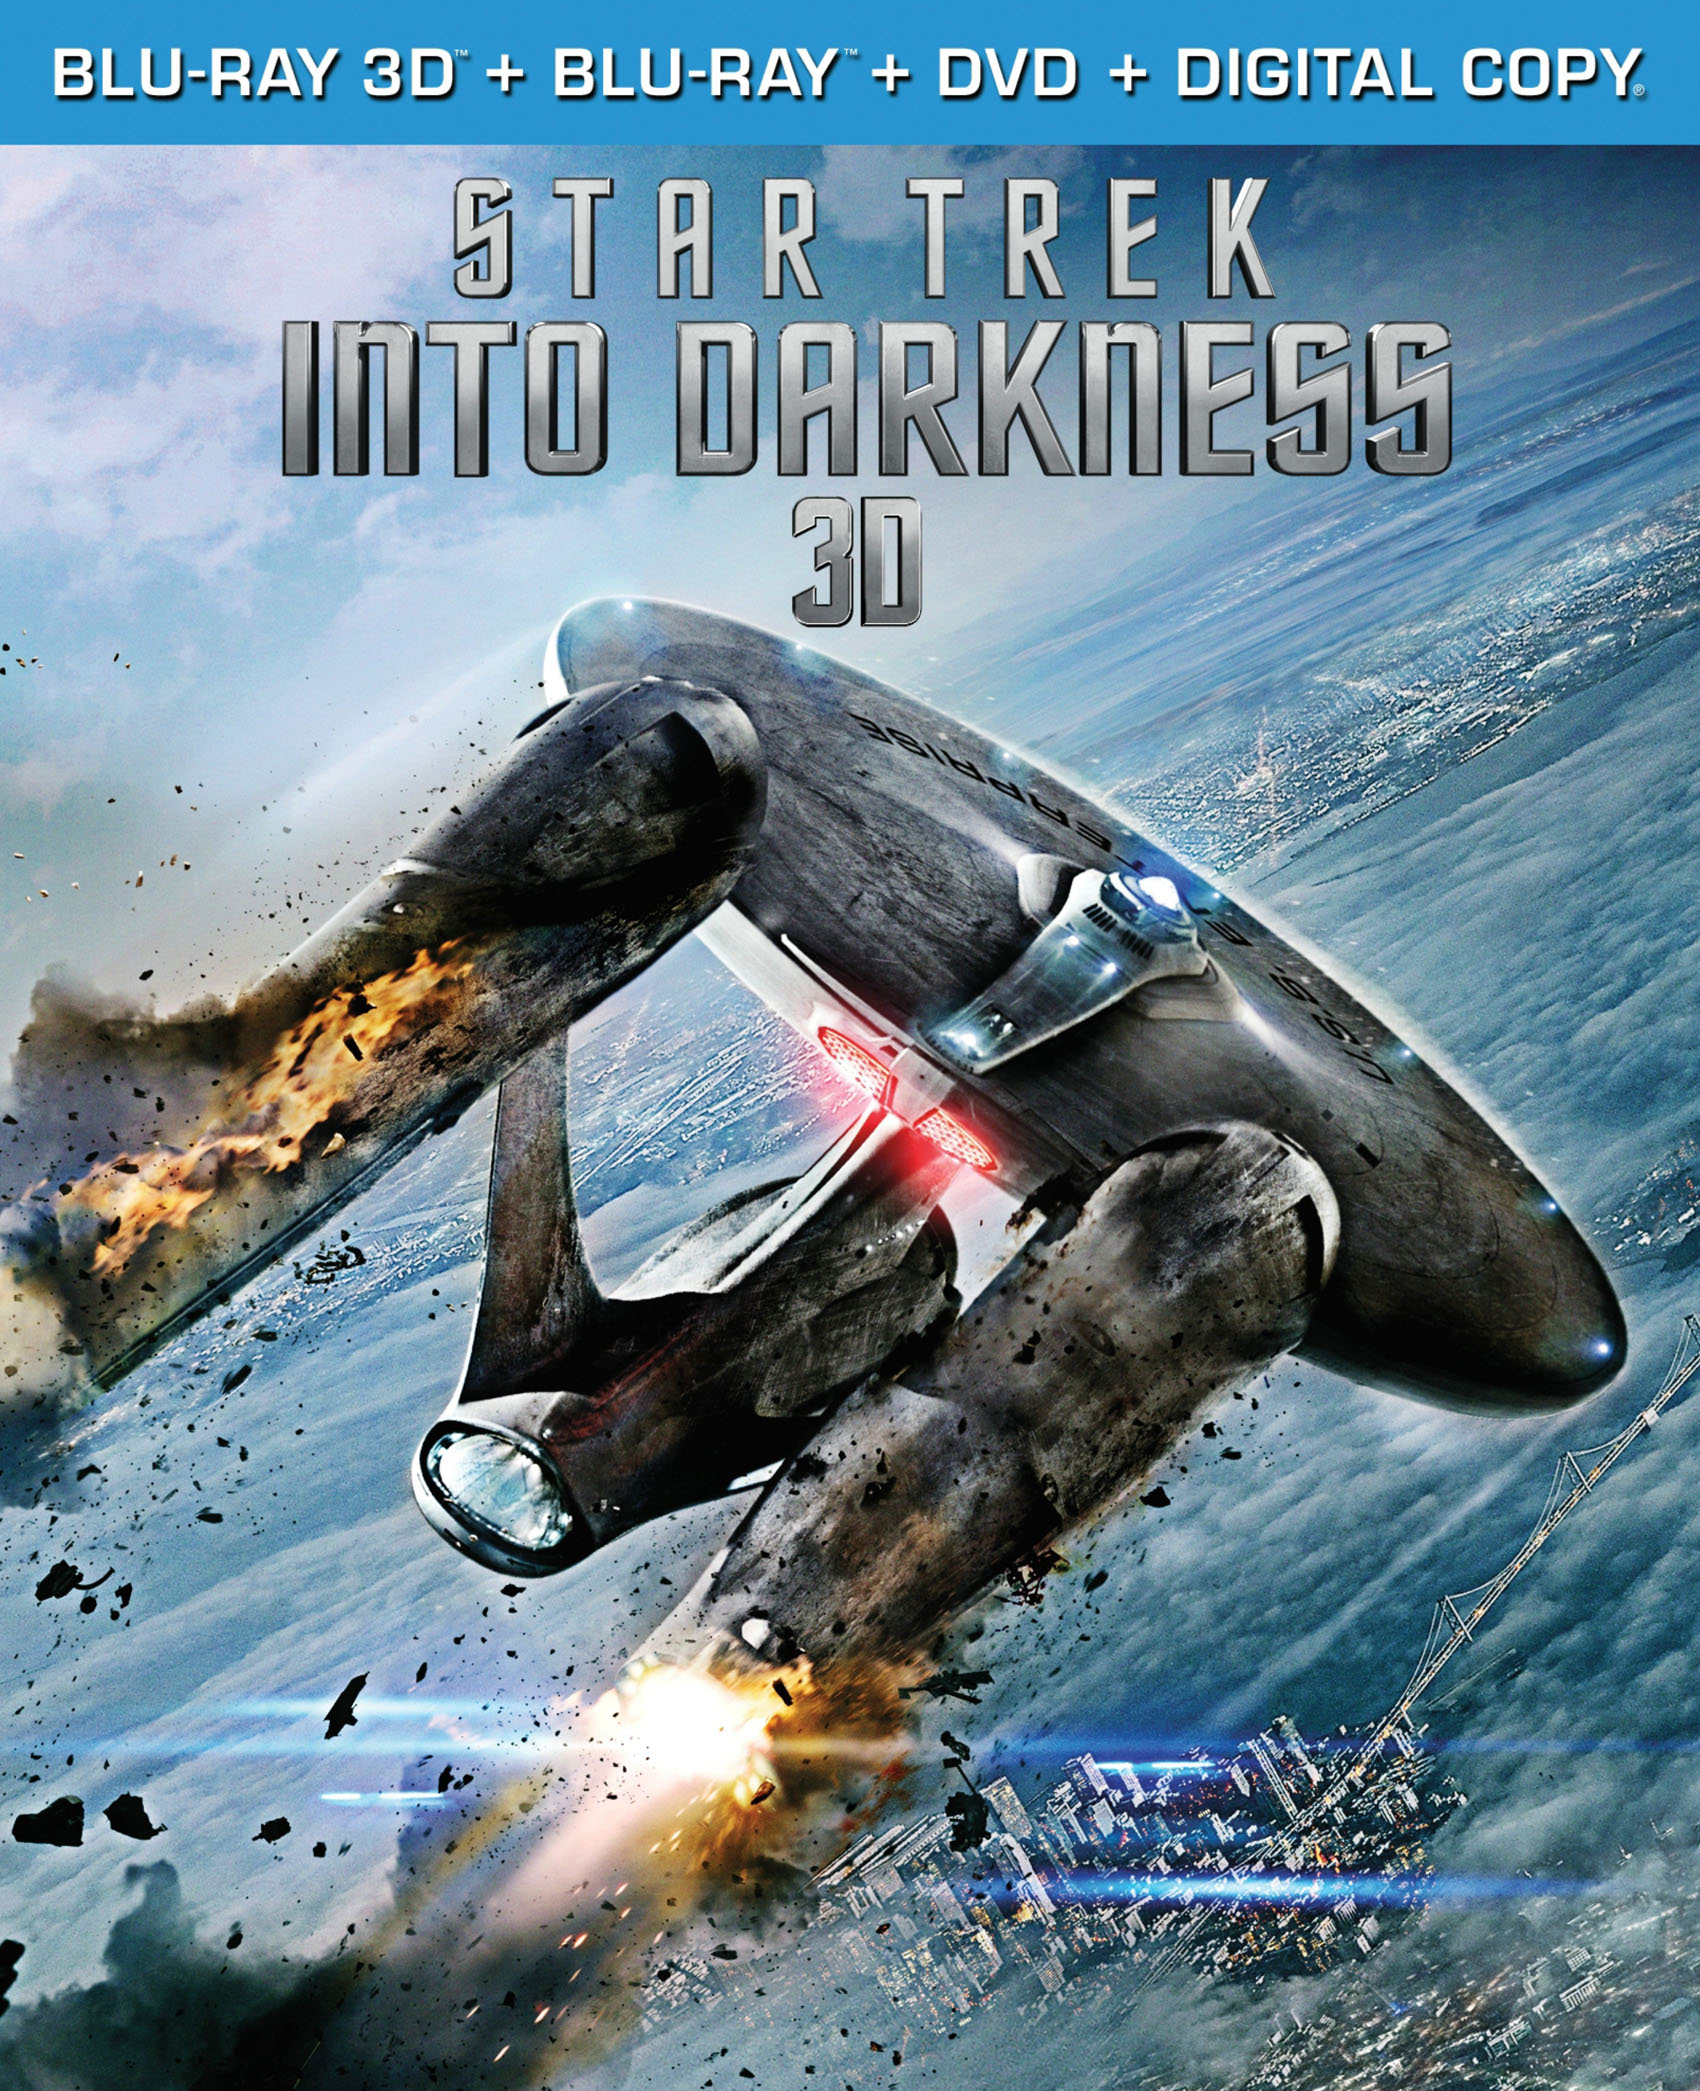 star trek into darkness blu ray cover art